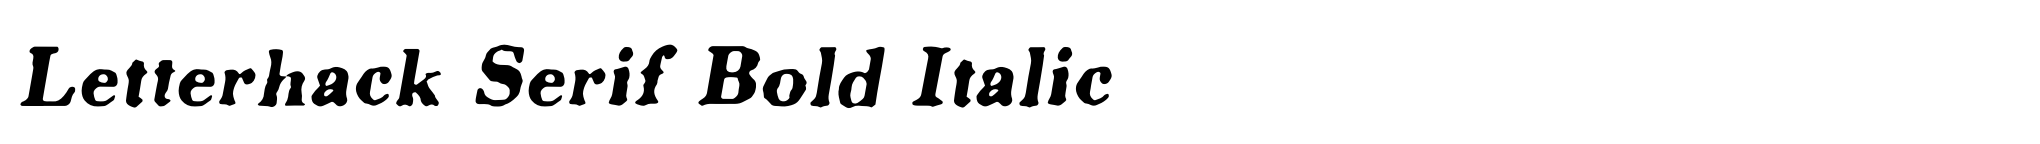 Letterhack Serif Bold Italic image